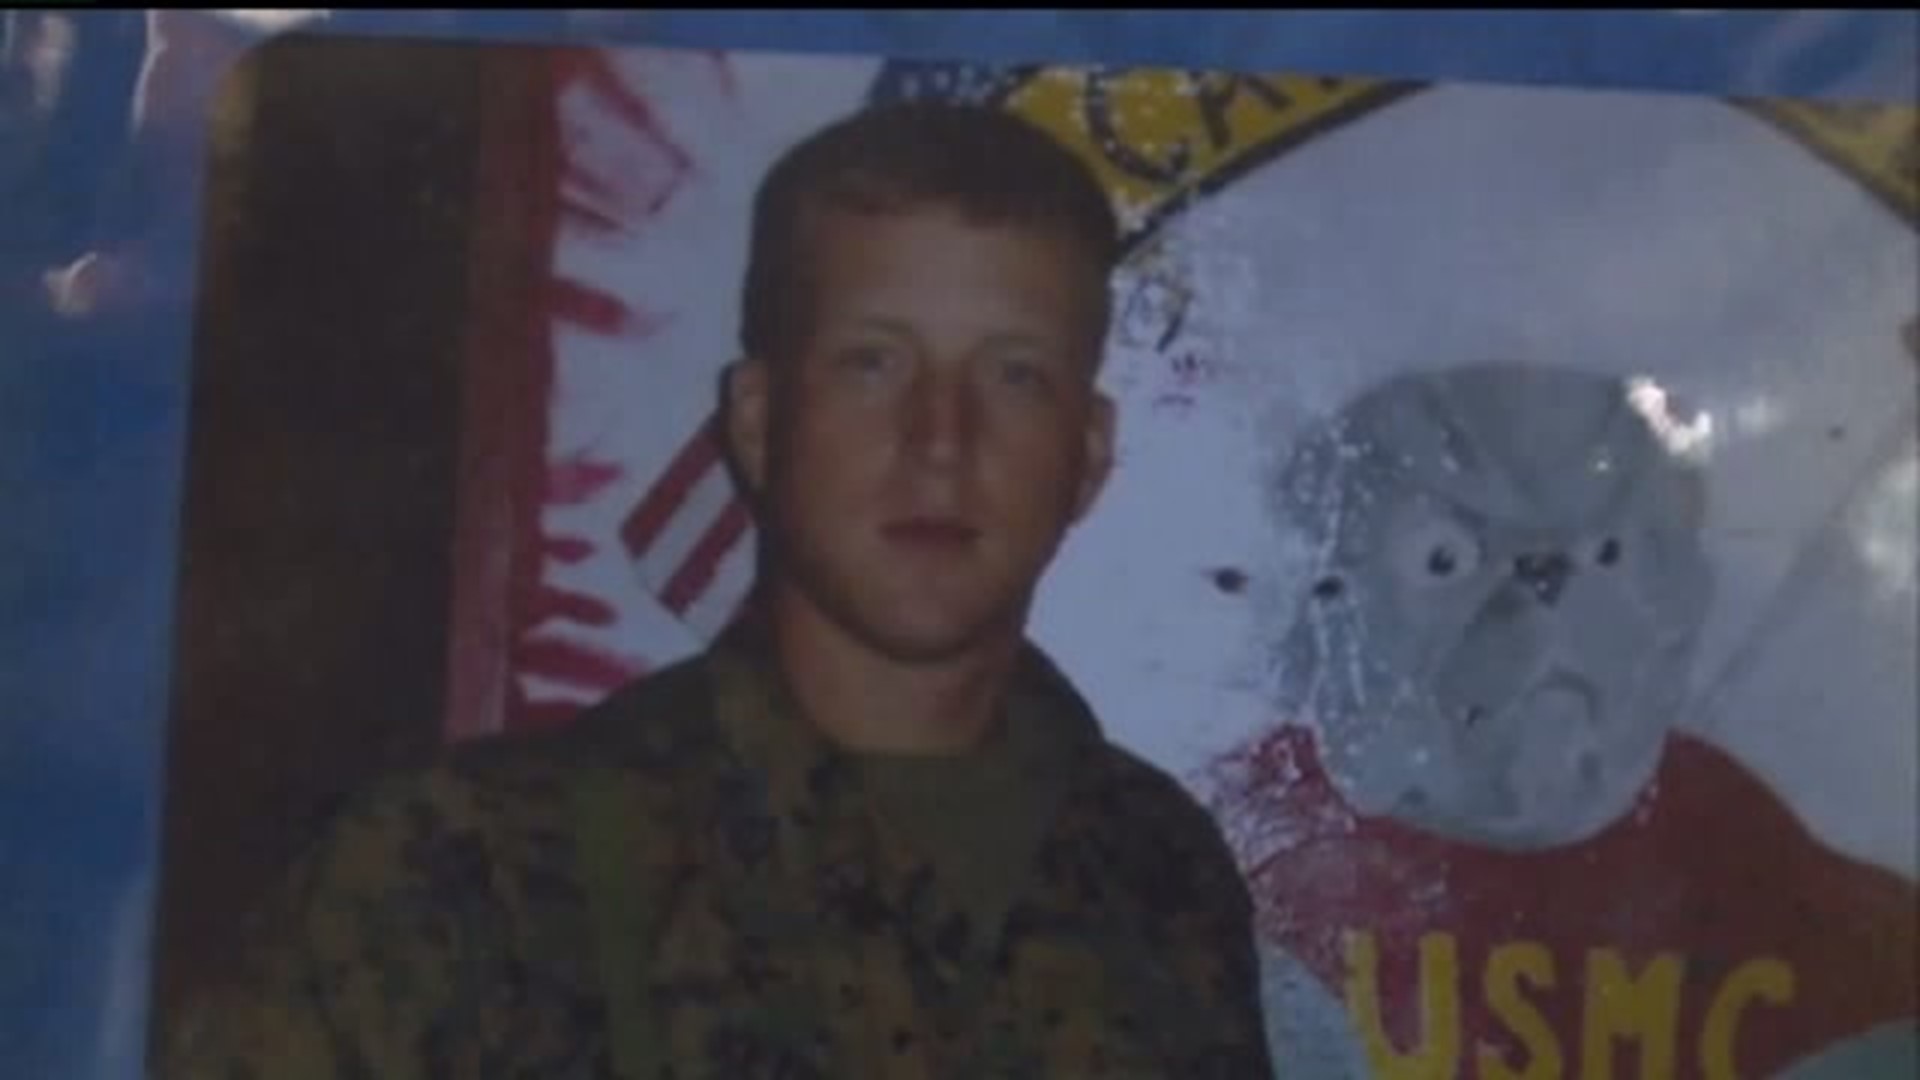 Davenport Marine living with PTSD took his own life